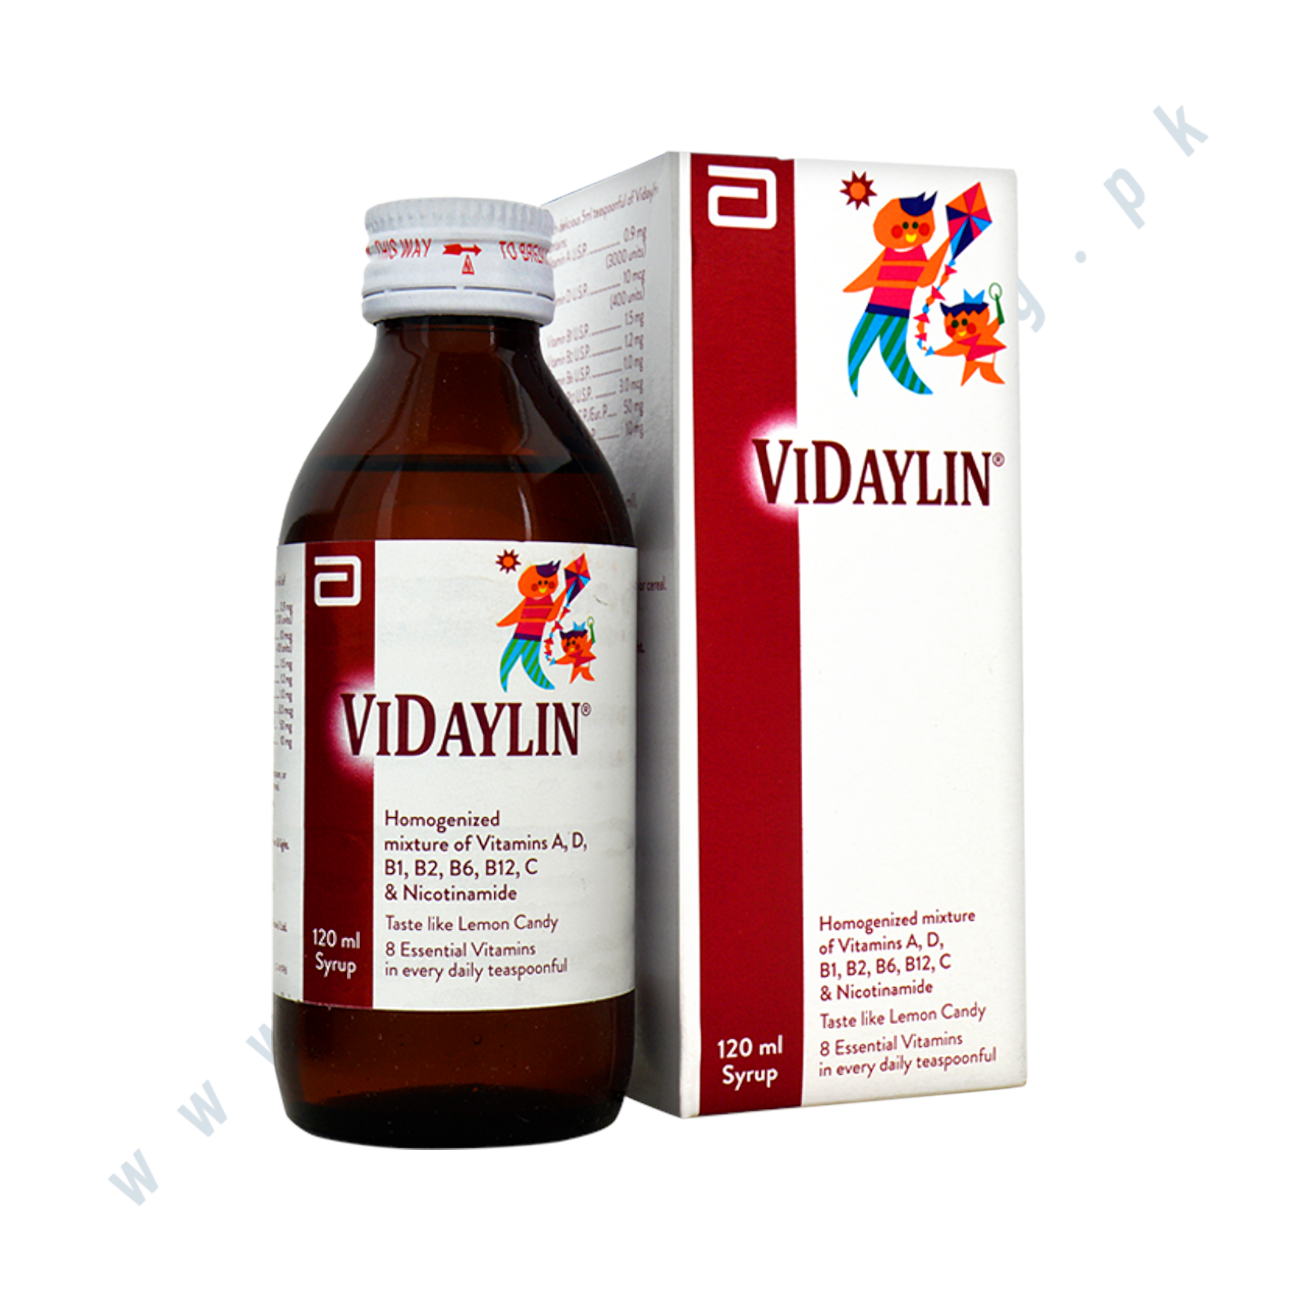 Vidaylin-M Multivitamin Syrup for Men, Women, Child, pack of 4 - 